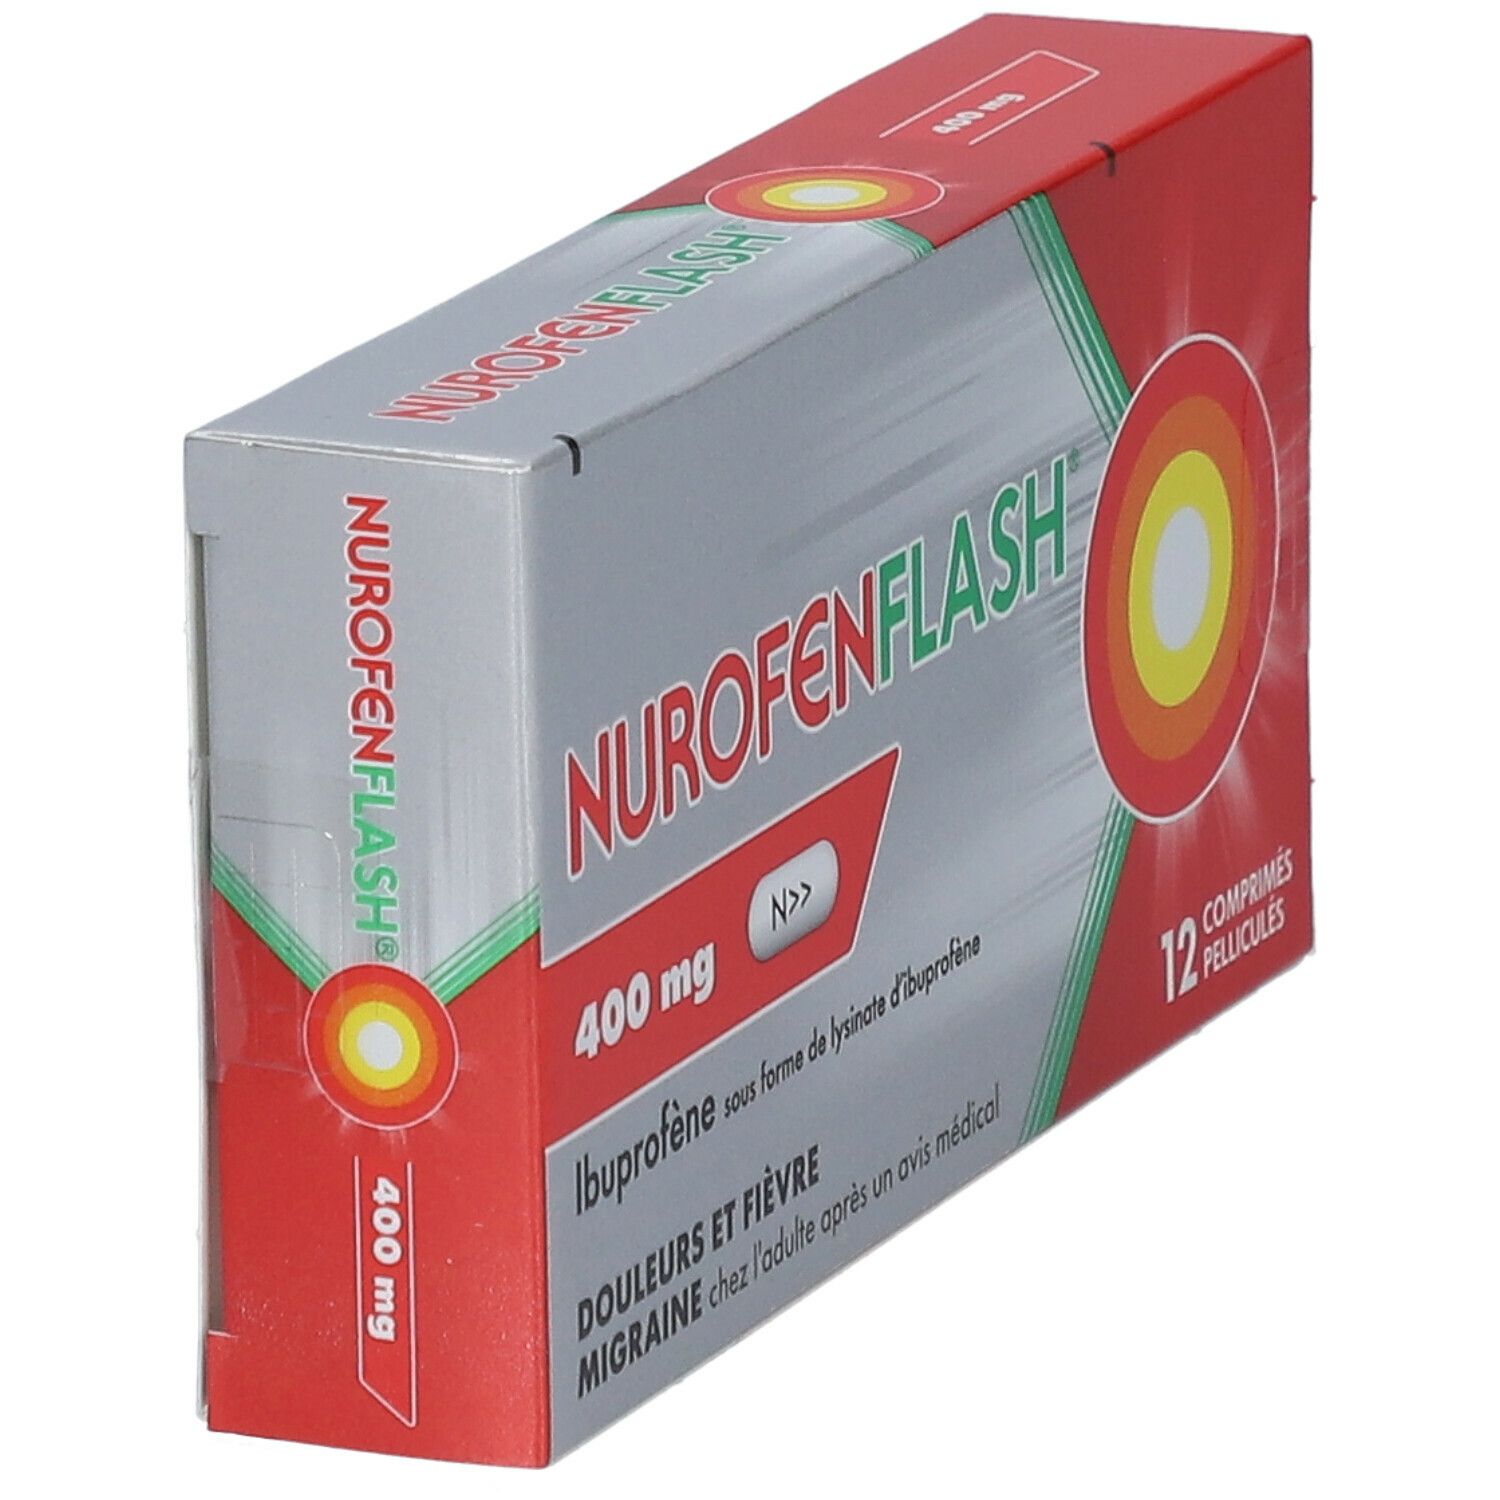 Nurofenflash® 400 mg